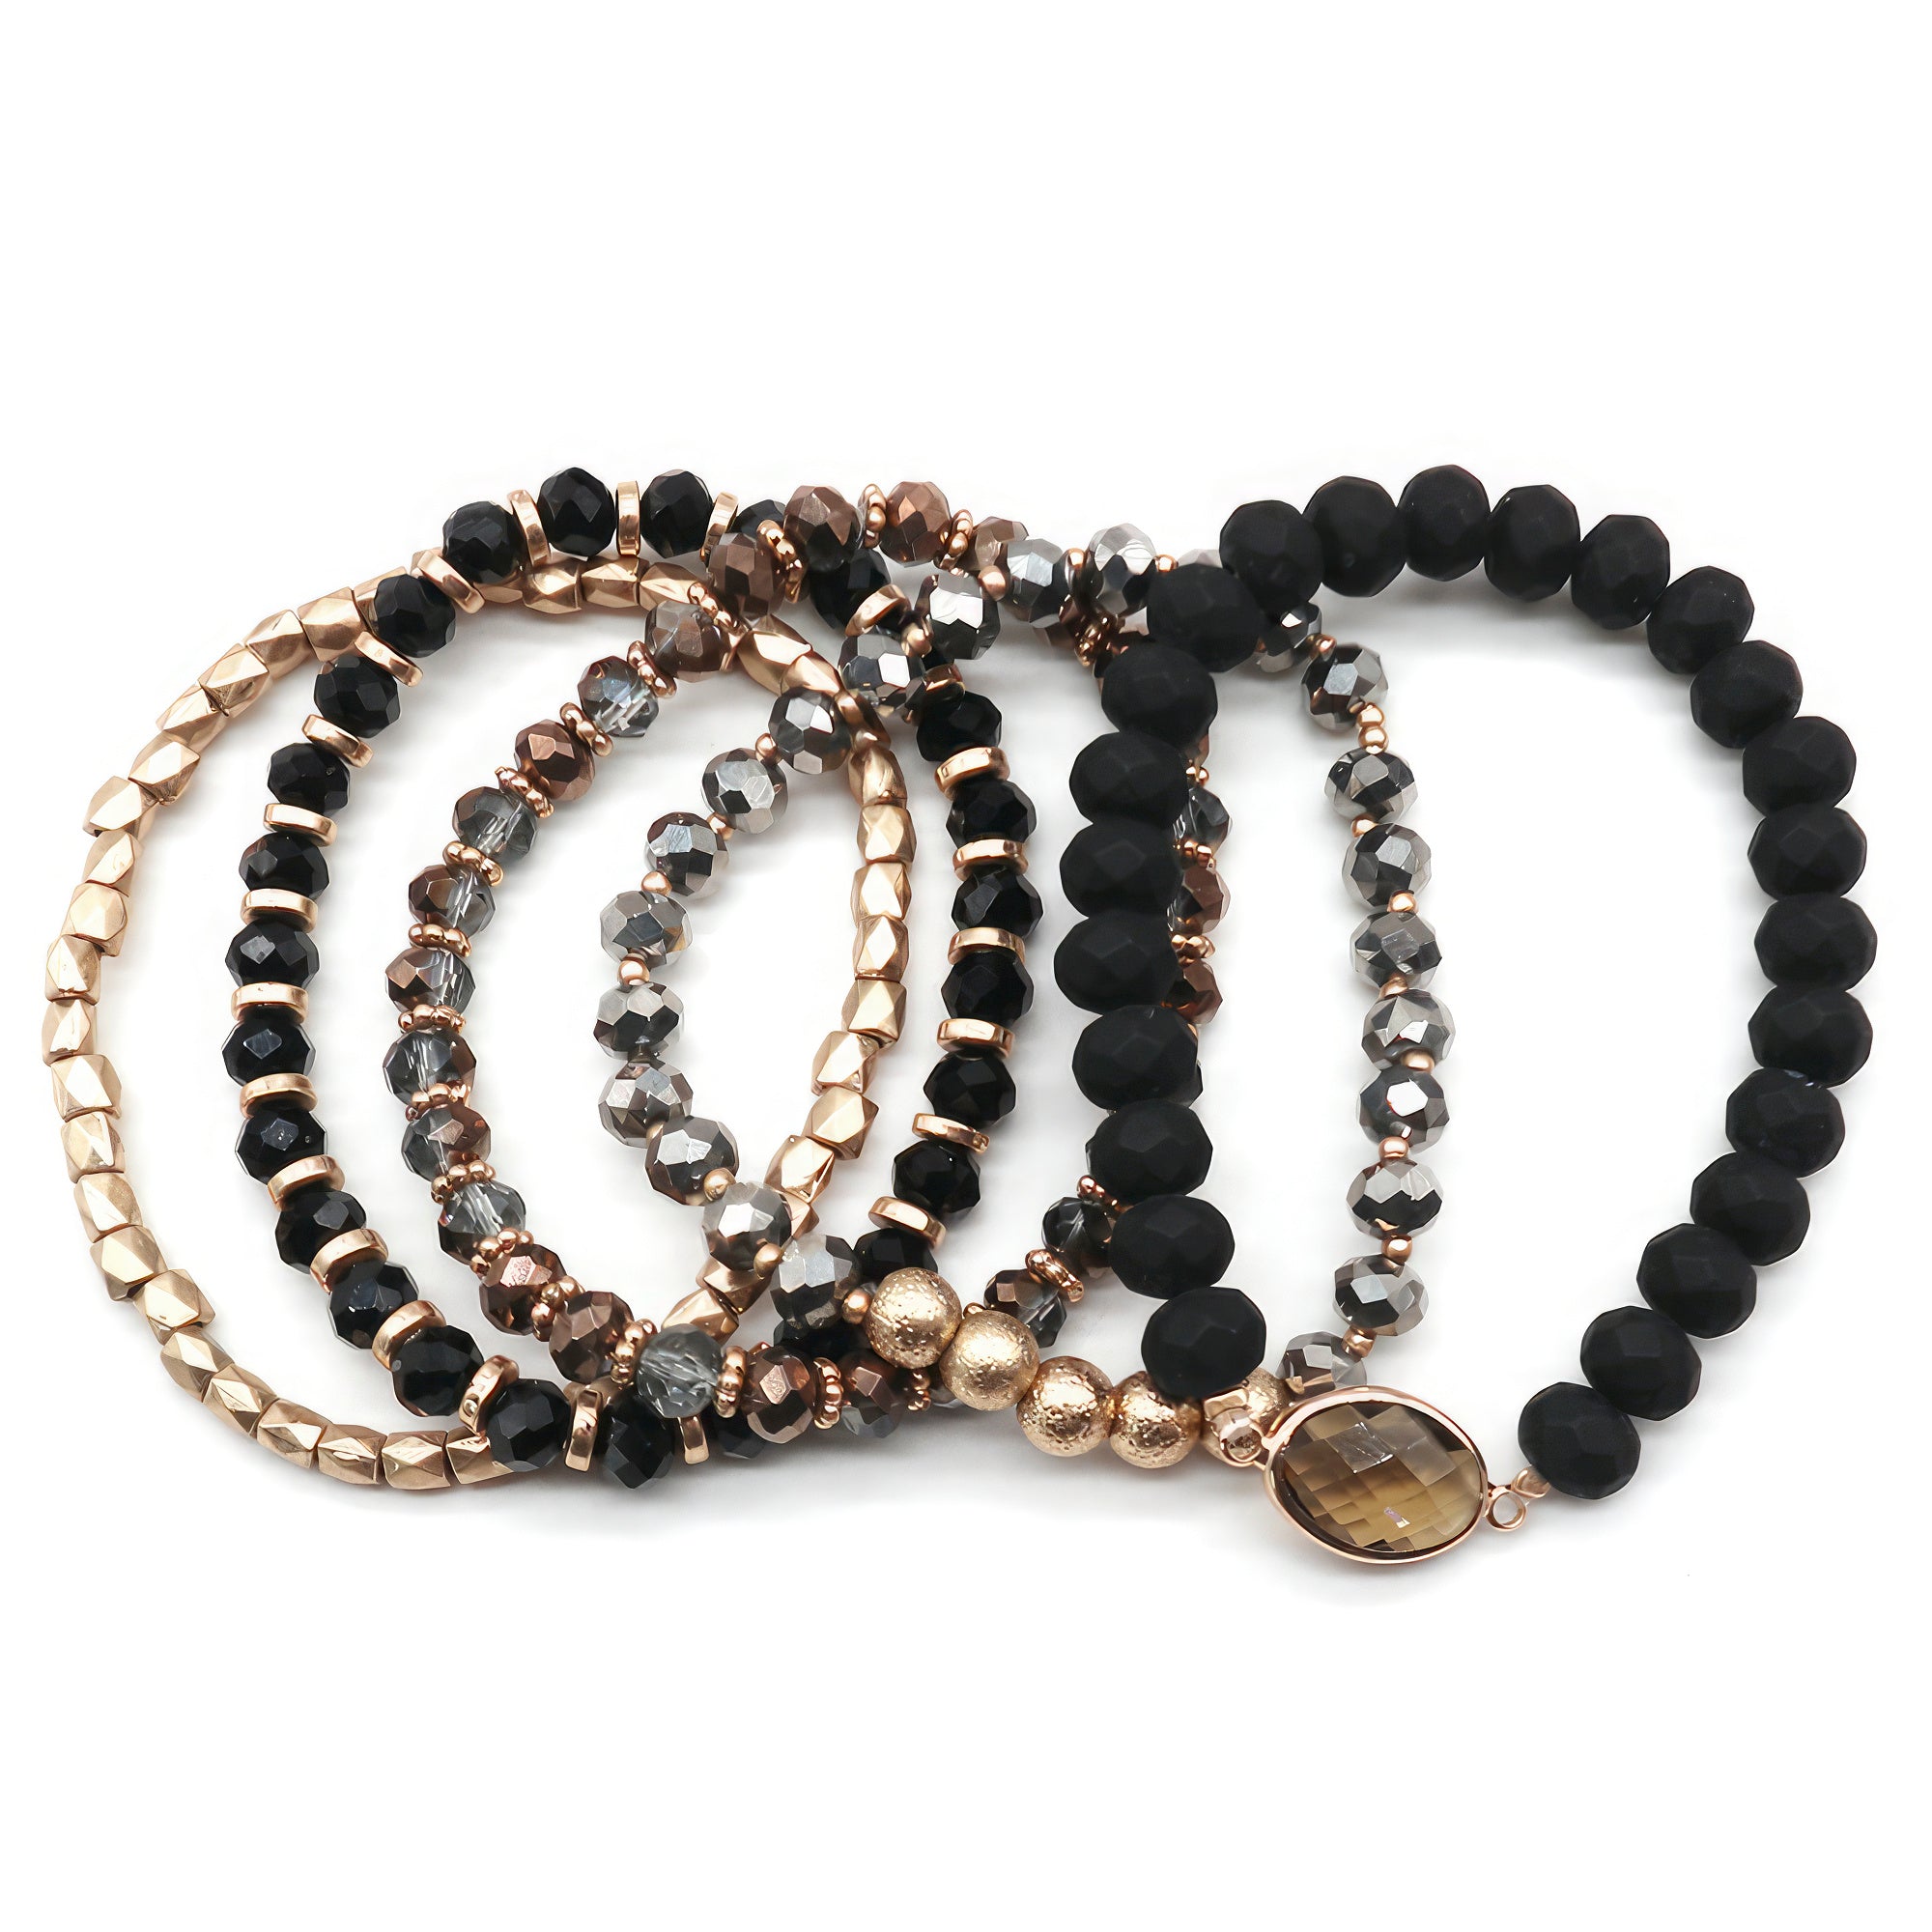 Multi Bead Stretch Bracelet Set with Black, Natural & Mint Beads